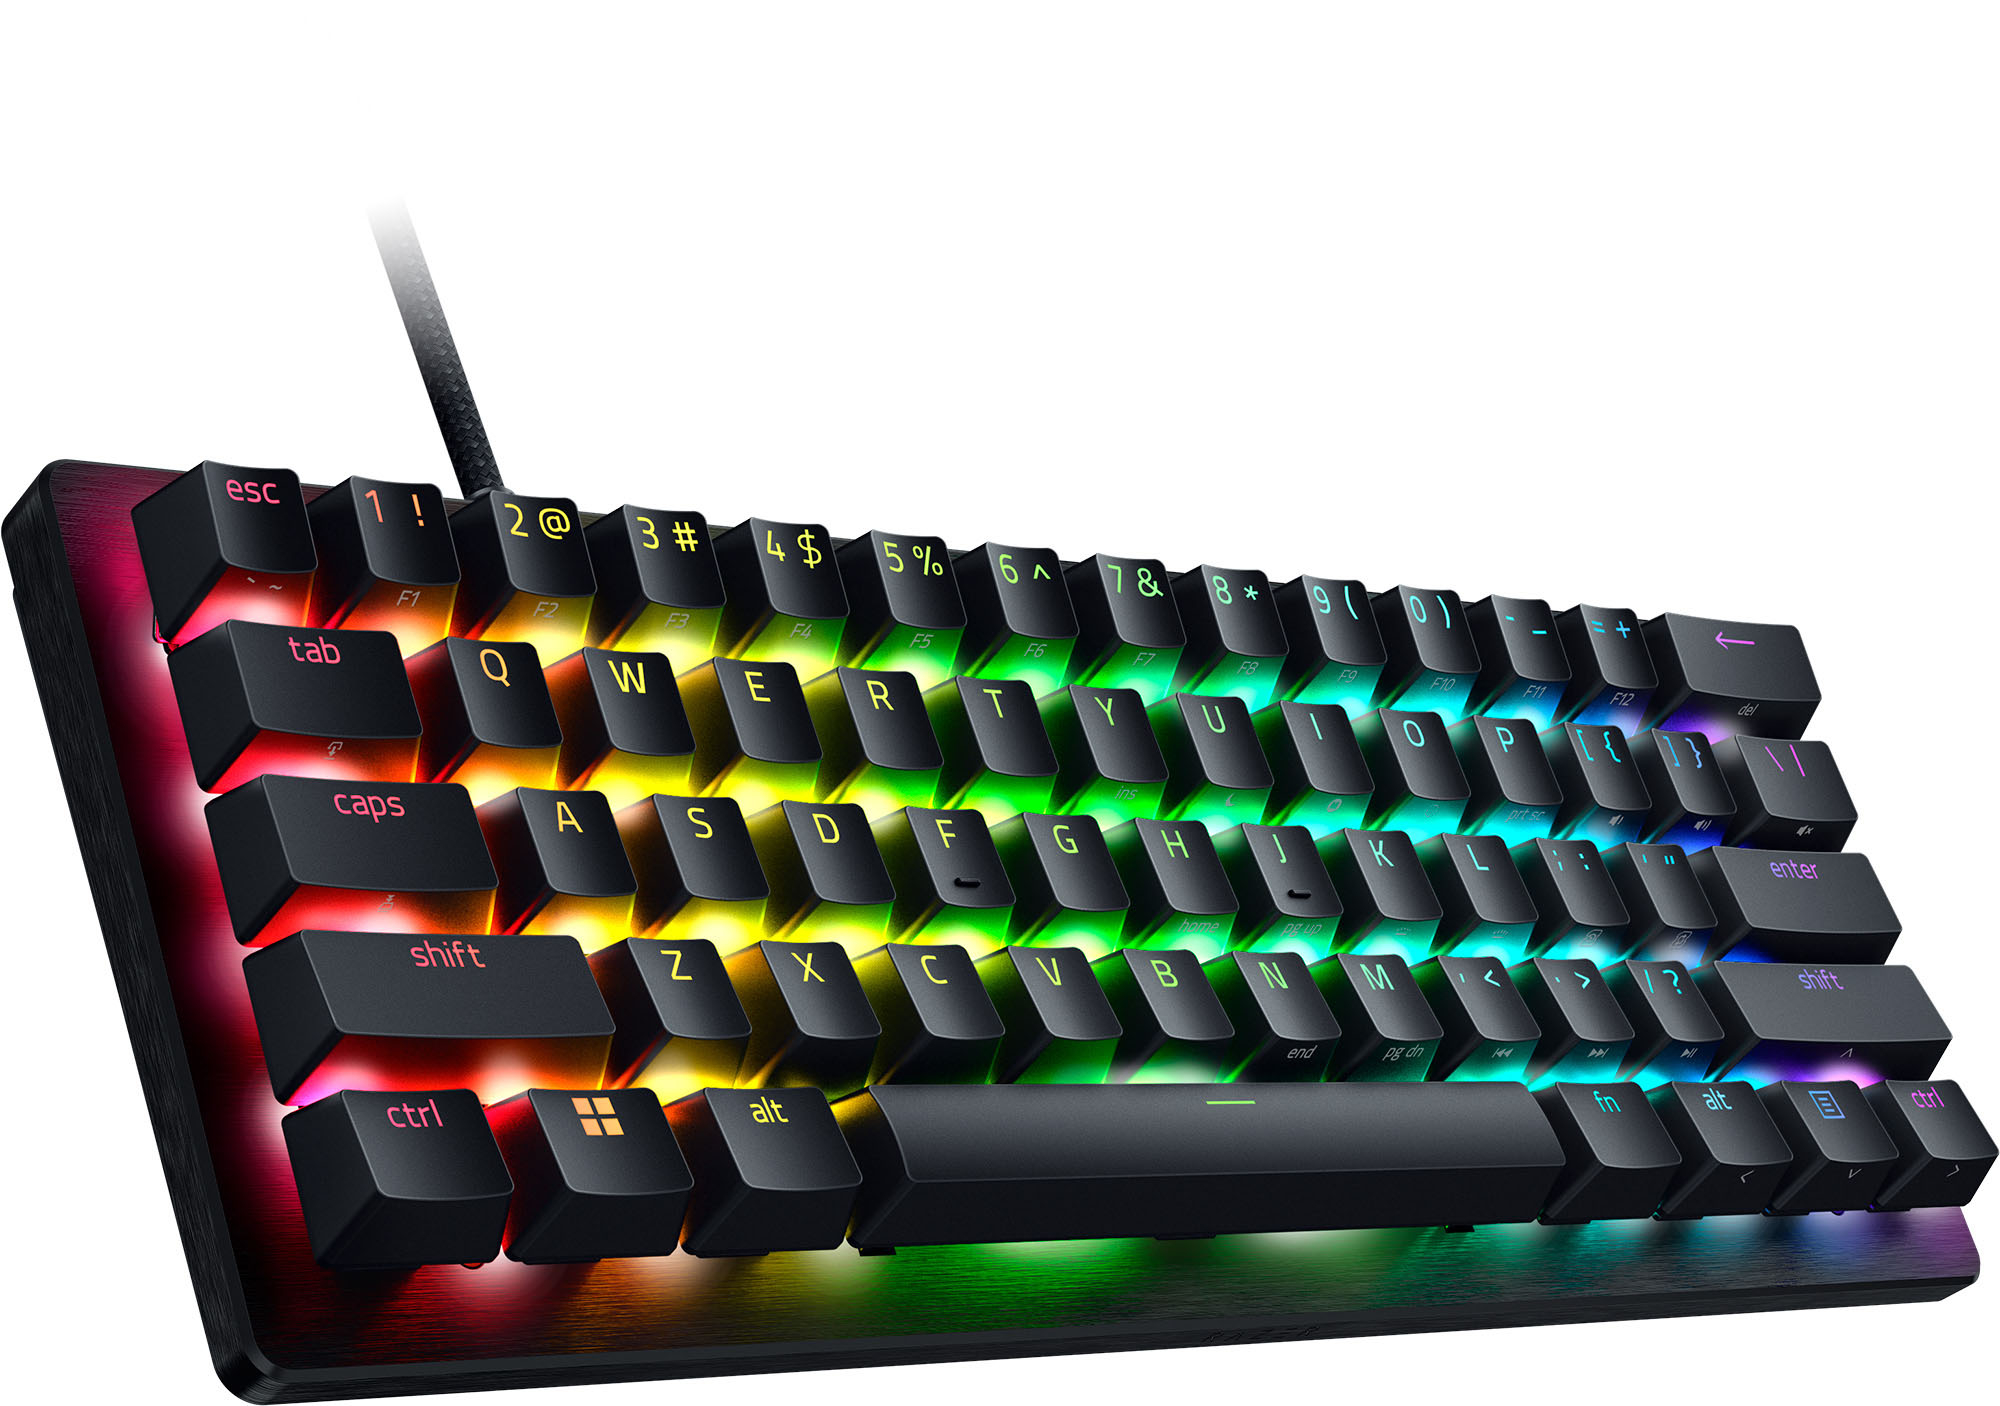 New Razer Huntsman V3 Pro gaming keyboards unveiled today